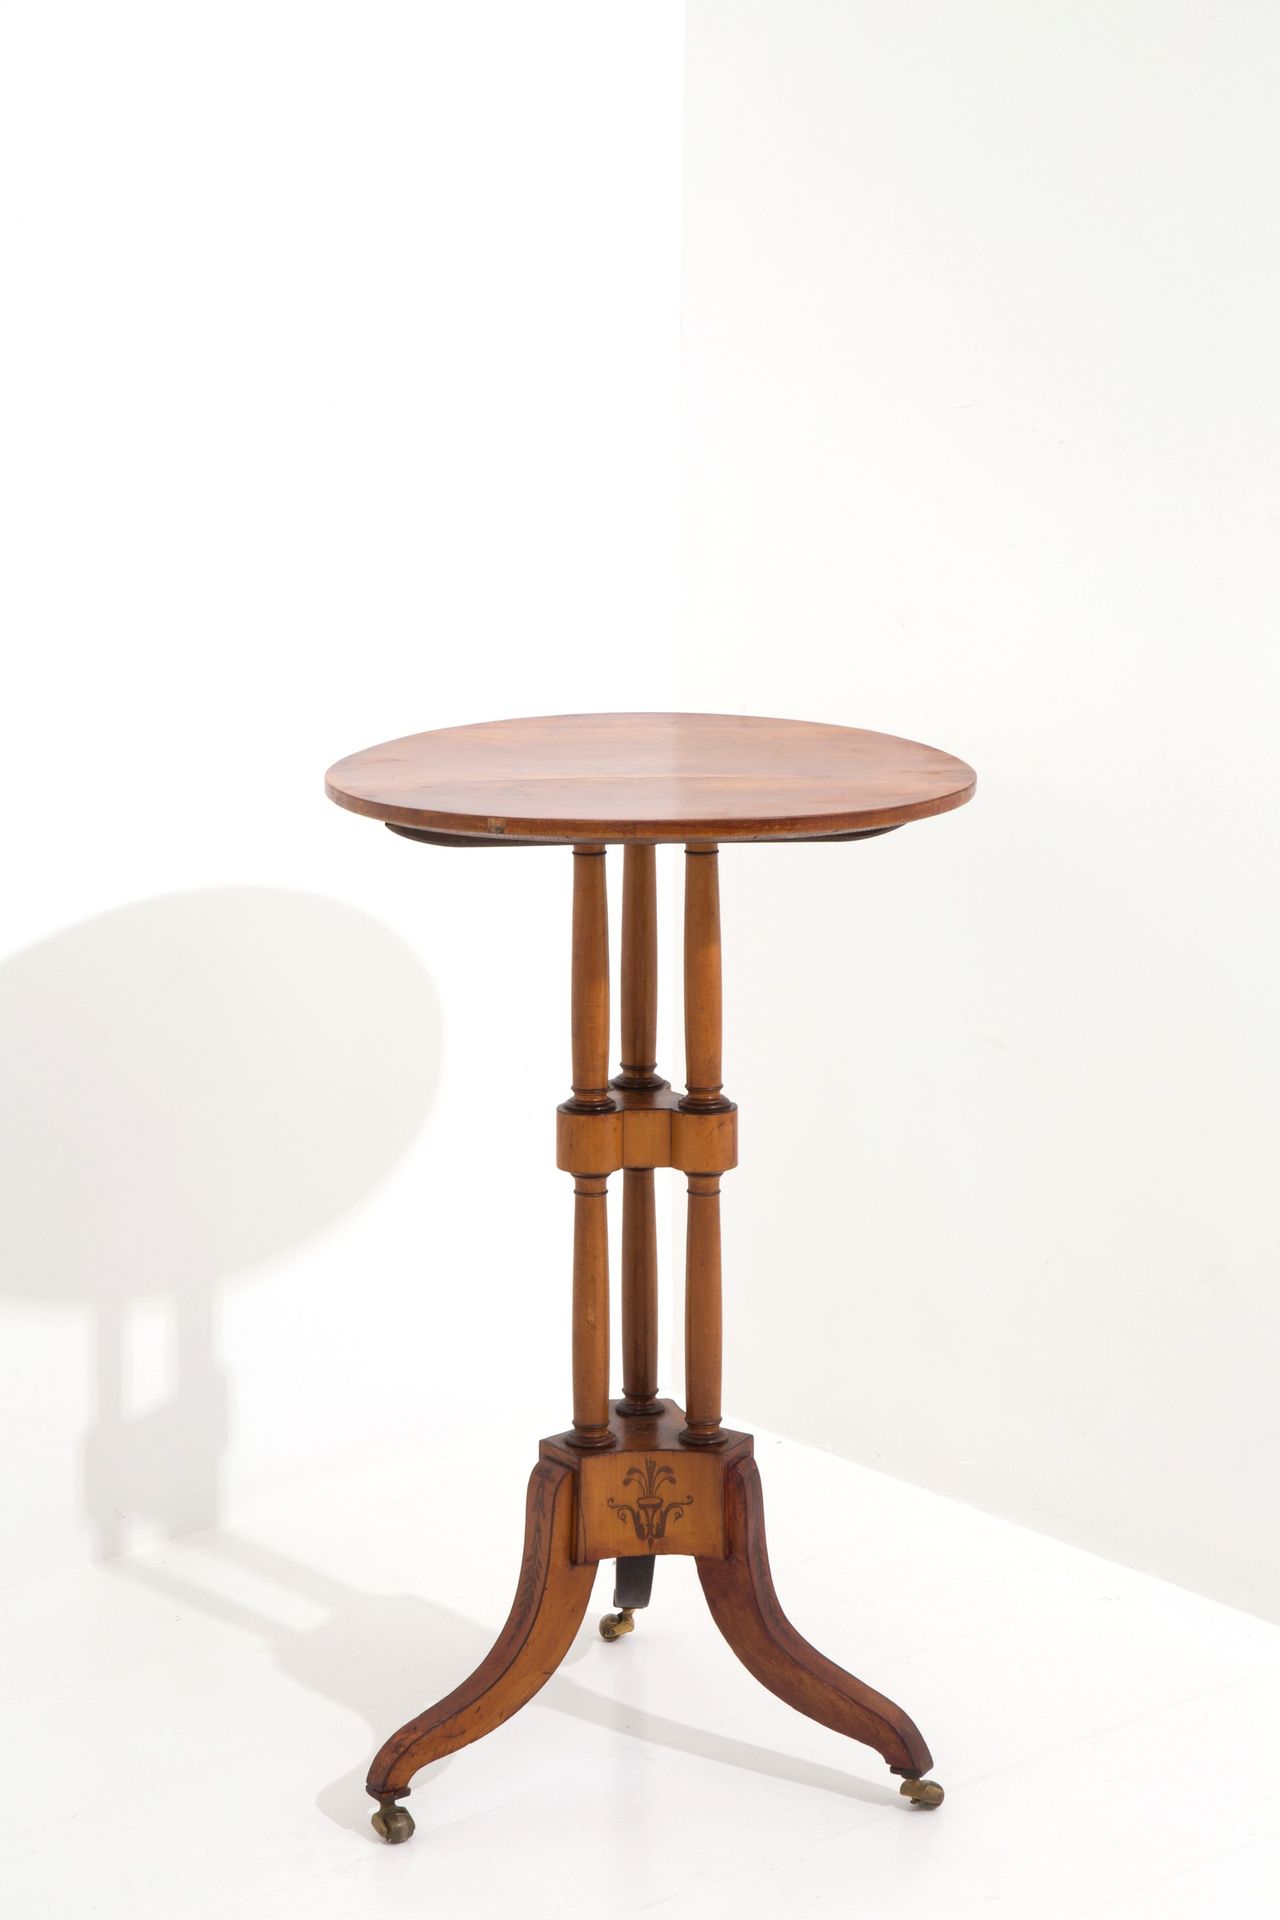 Tripod table 缎面木质三脚架咖啡桌。英国。19世纪晚期。 75x47.5 cm 约。